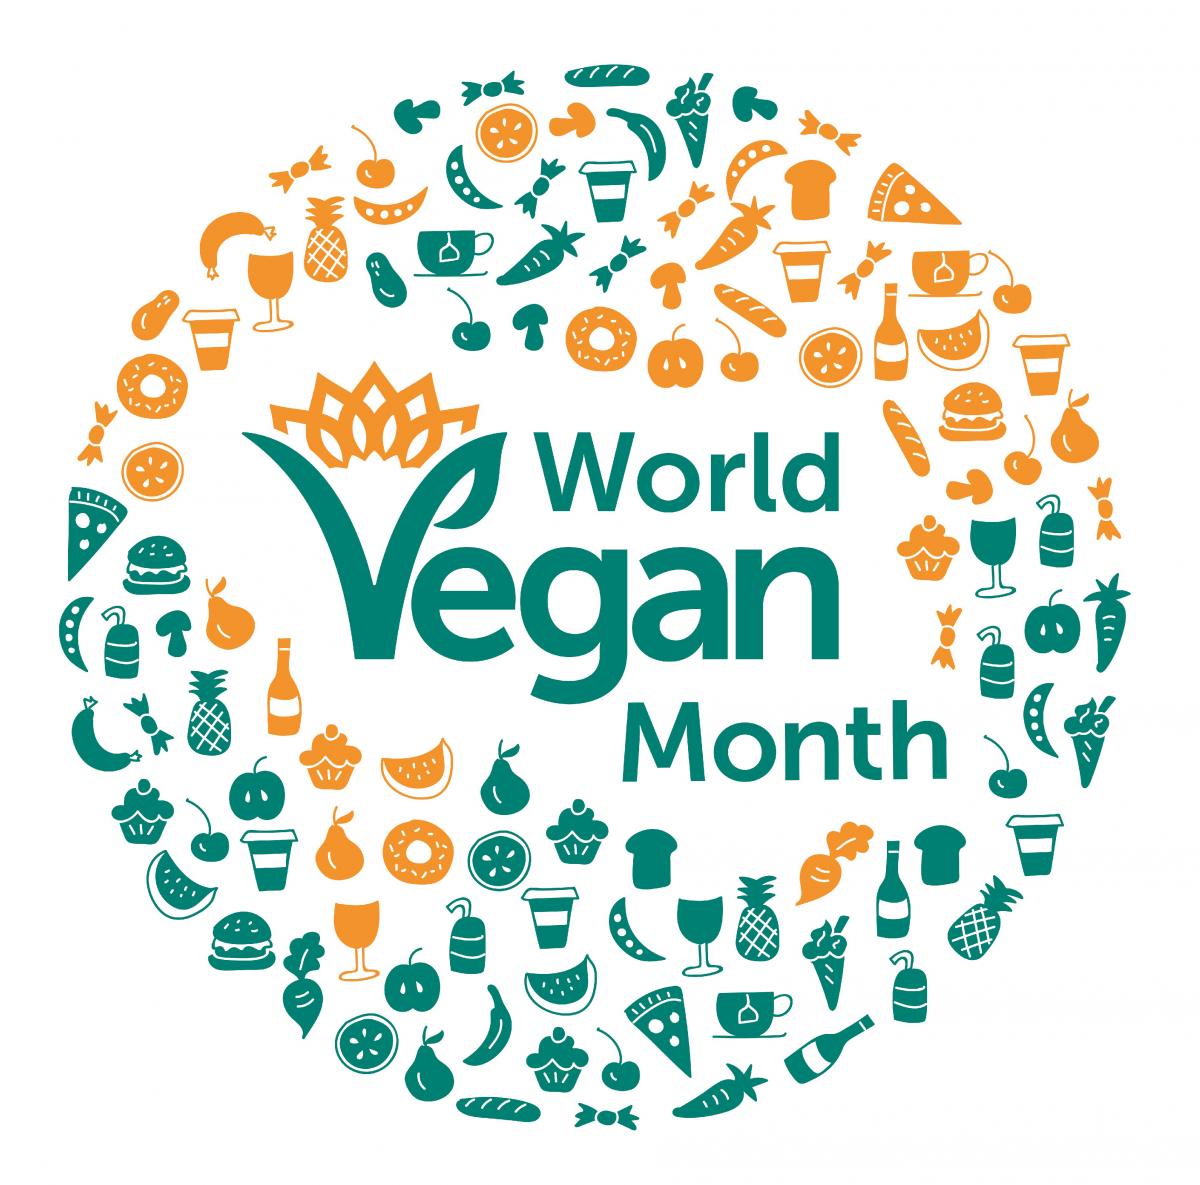 World vegan Month with a circle of cartoon food